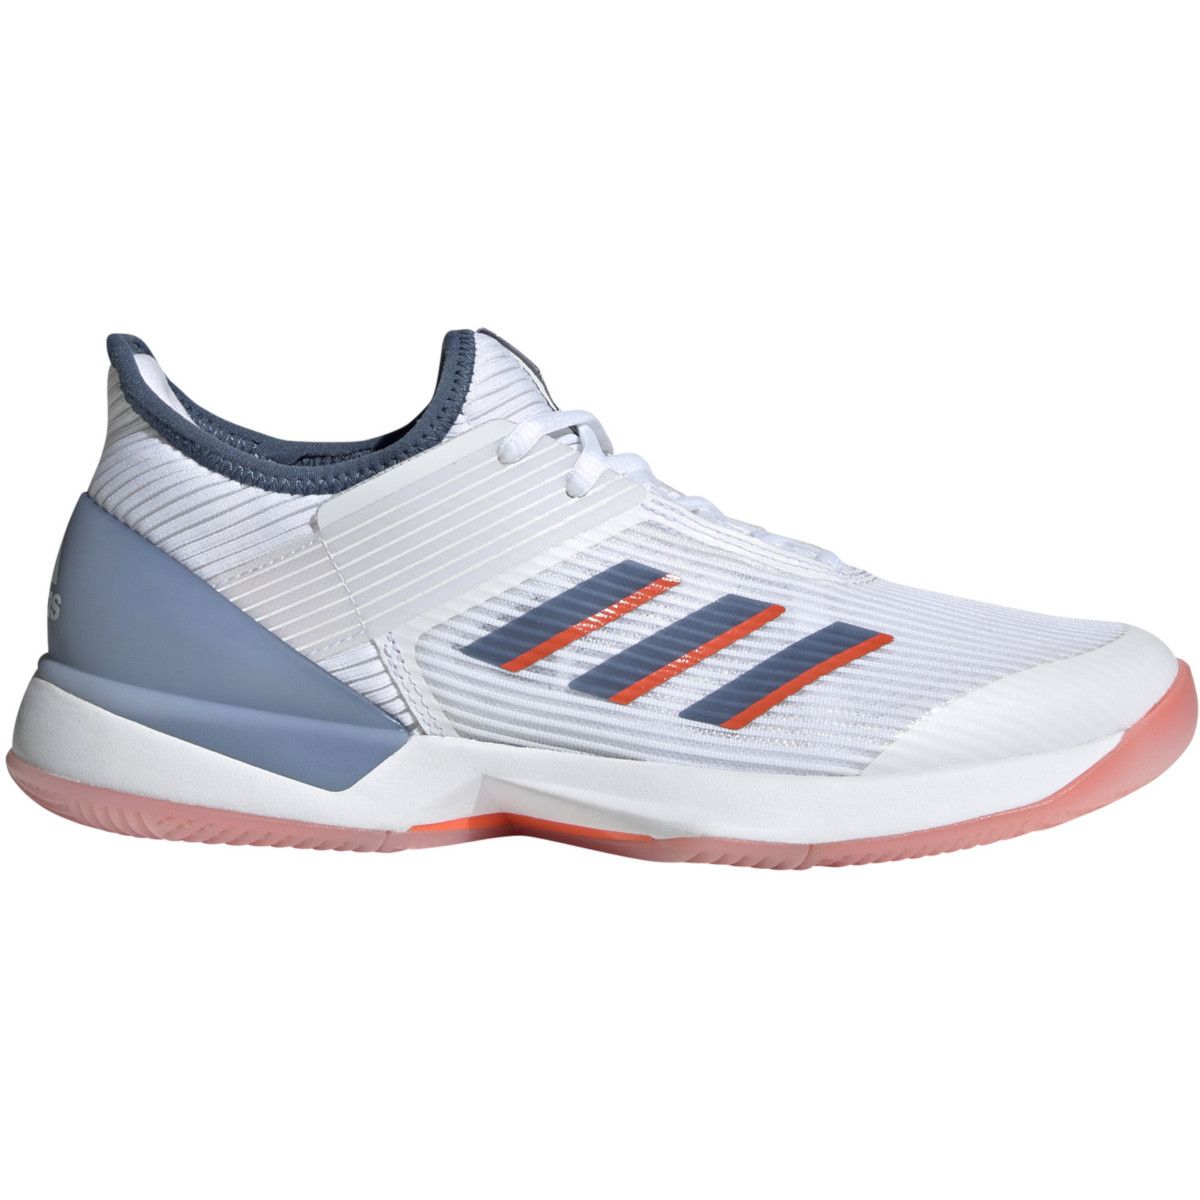 adidas Adizero Ubersonic 3 Women's Tennis Shoes EF1154